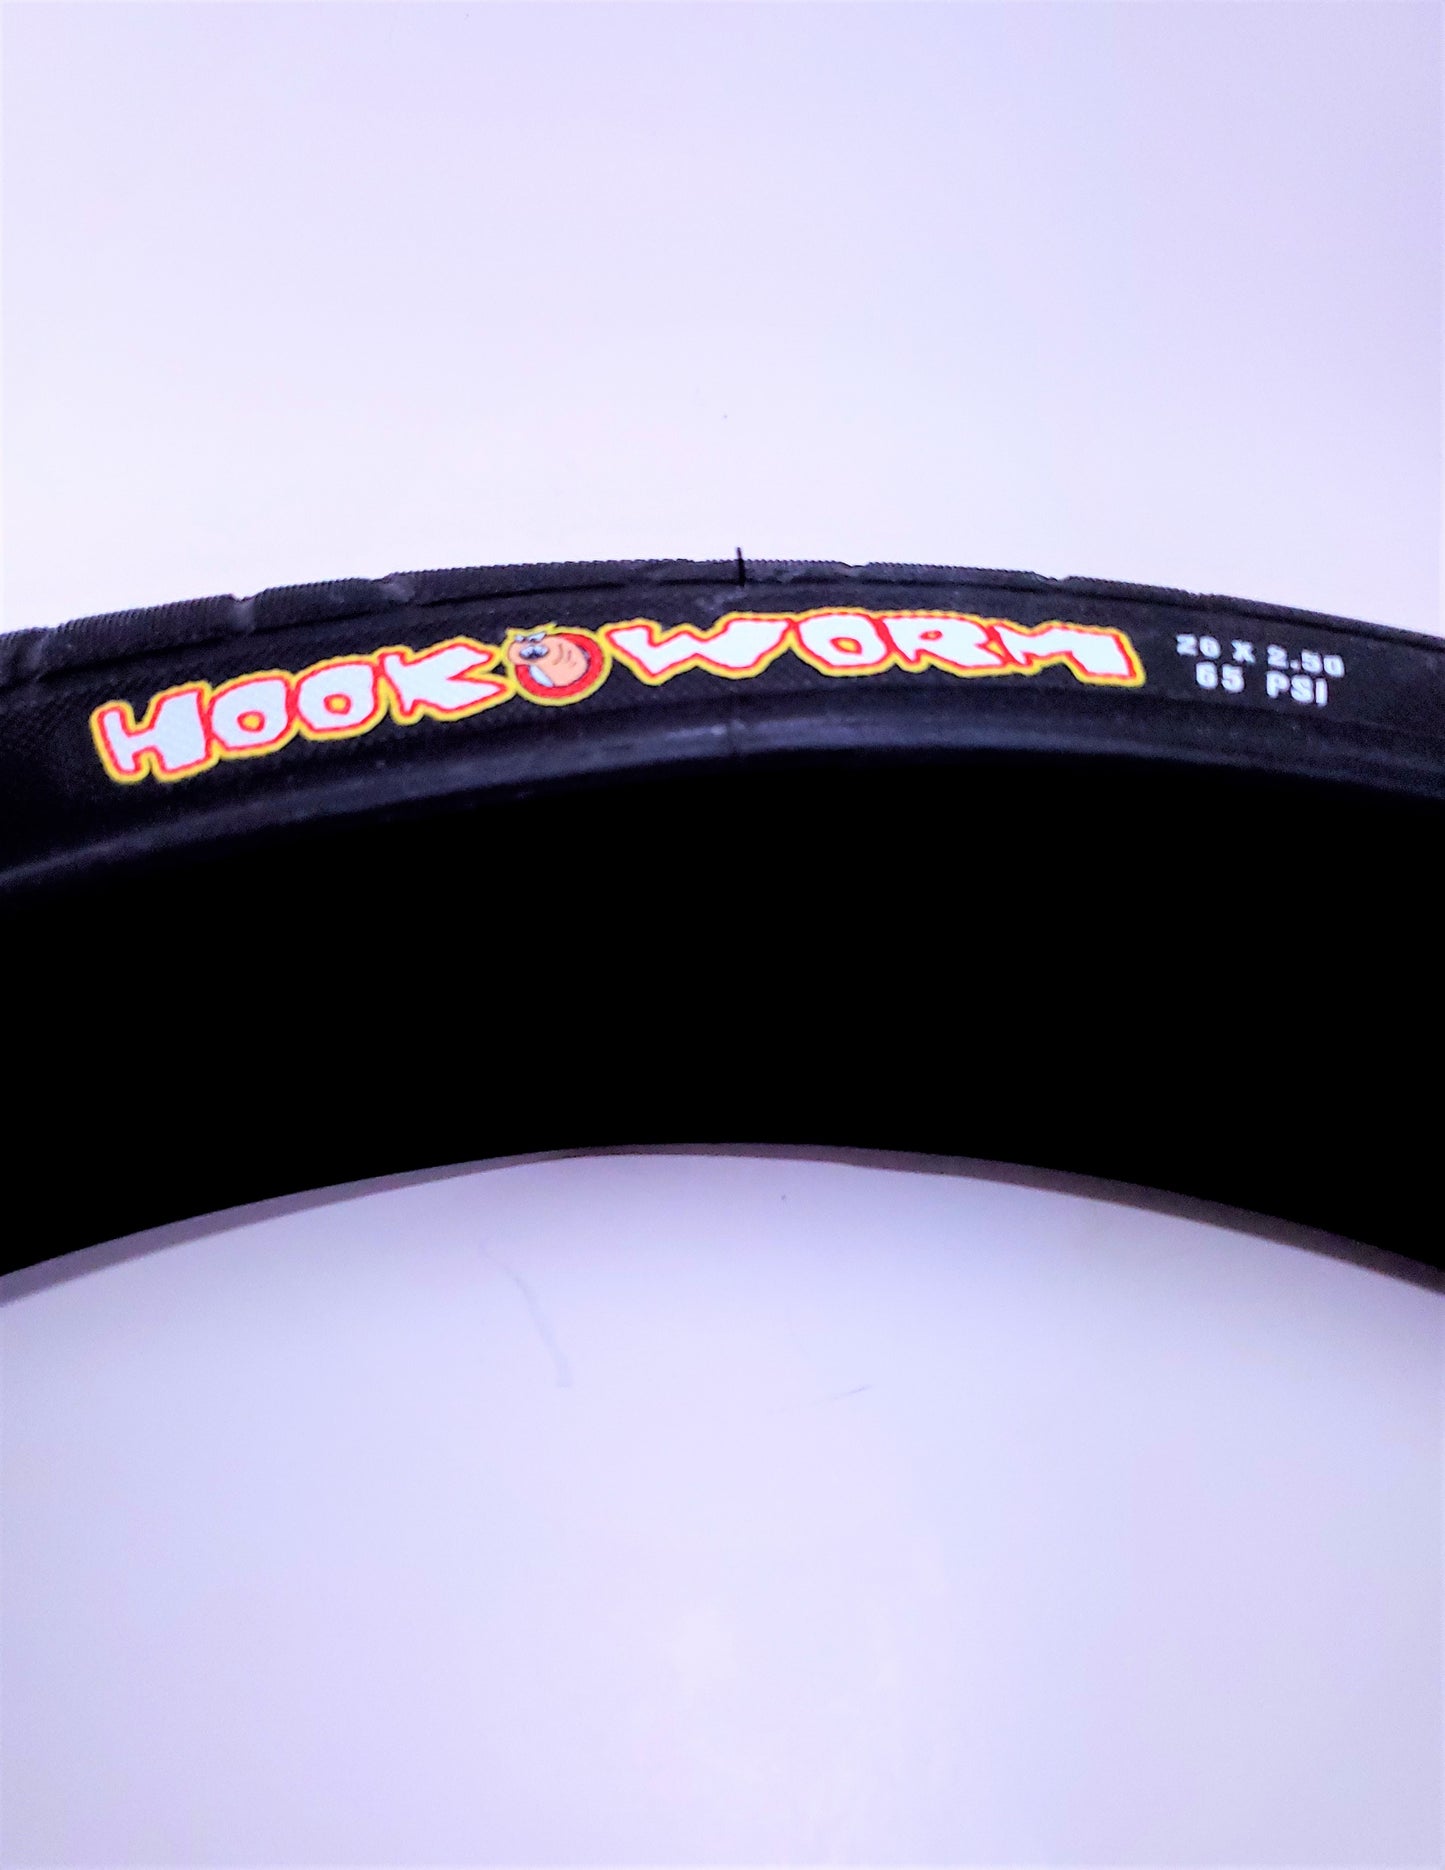 MAXXIS Hookworm 24"/26"/29" Tire (2.5")